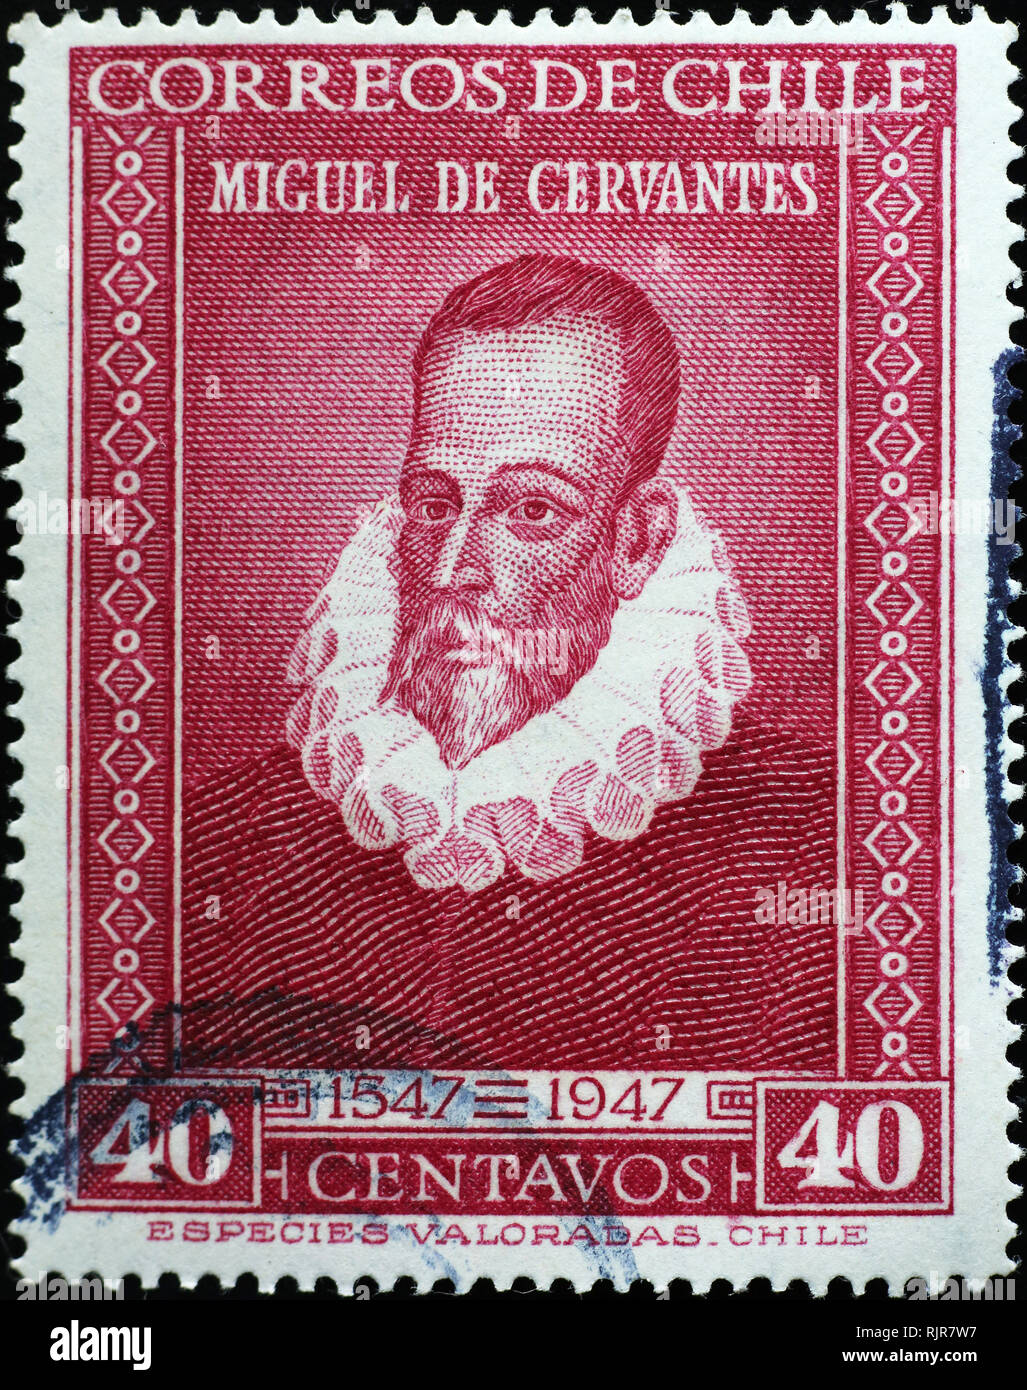 Miguel de Cervantes on chilean postage stamp Stock Photo